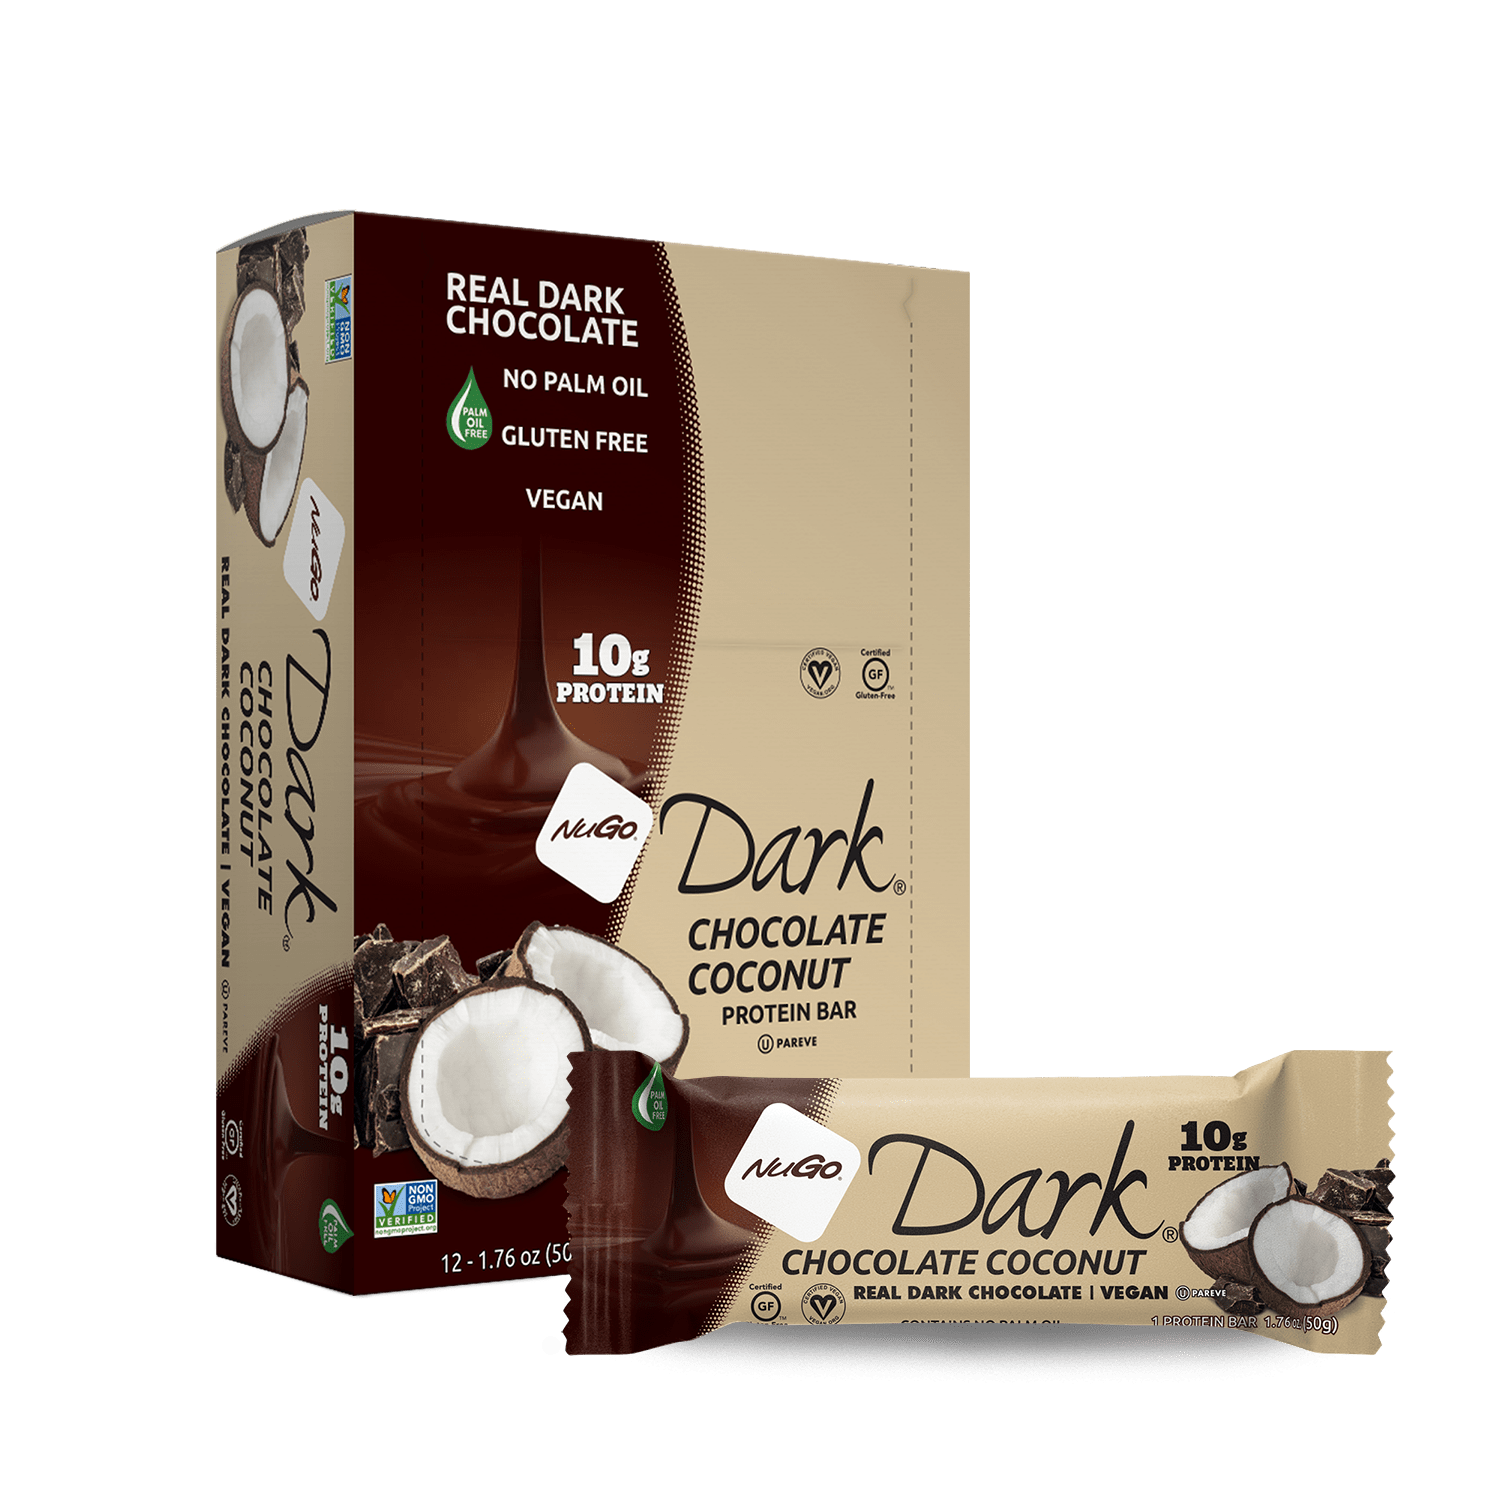 NuGo Dark Chocolate Cocnut Bar and Box